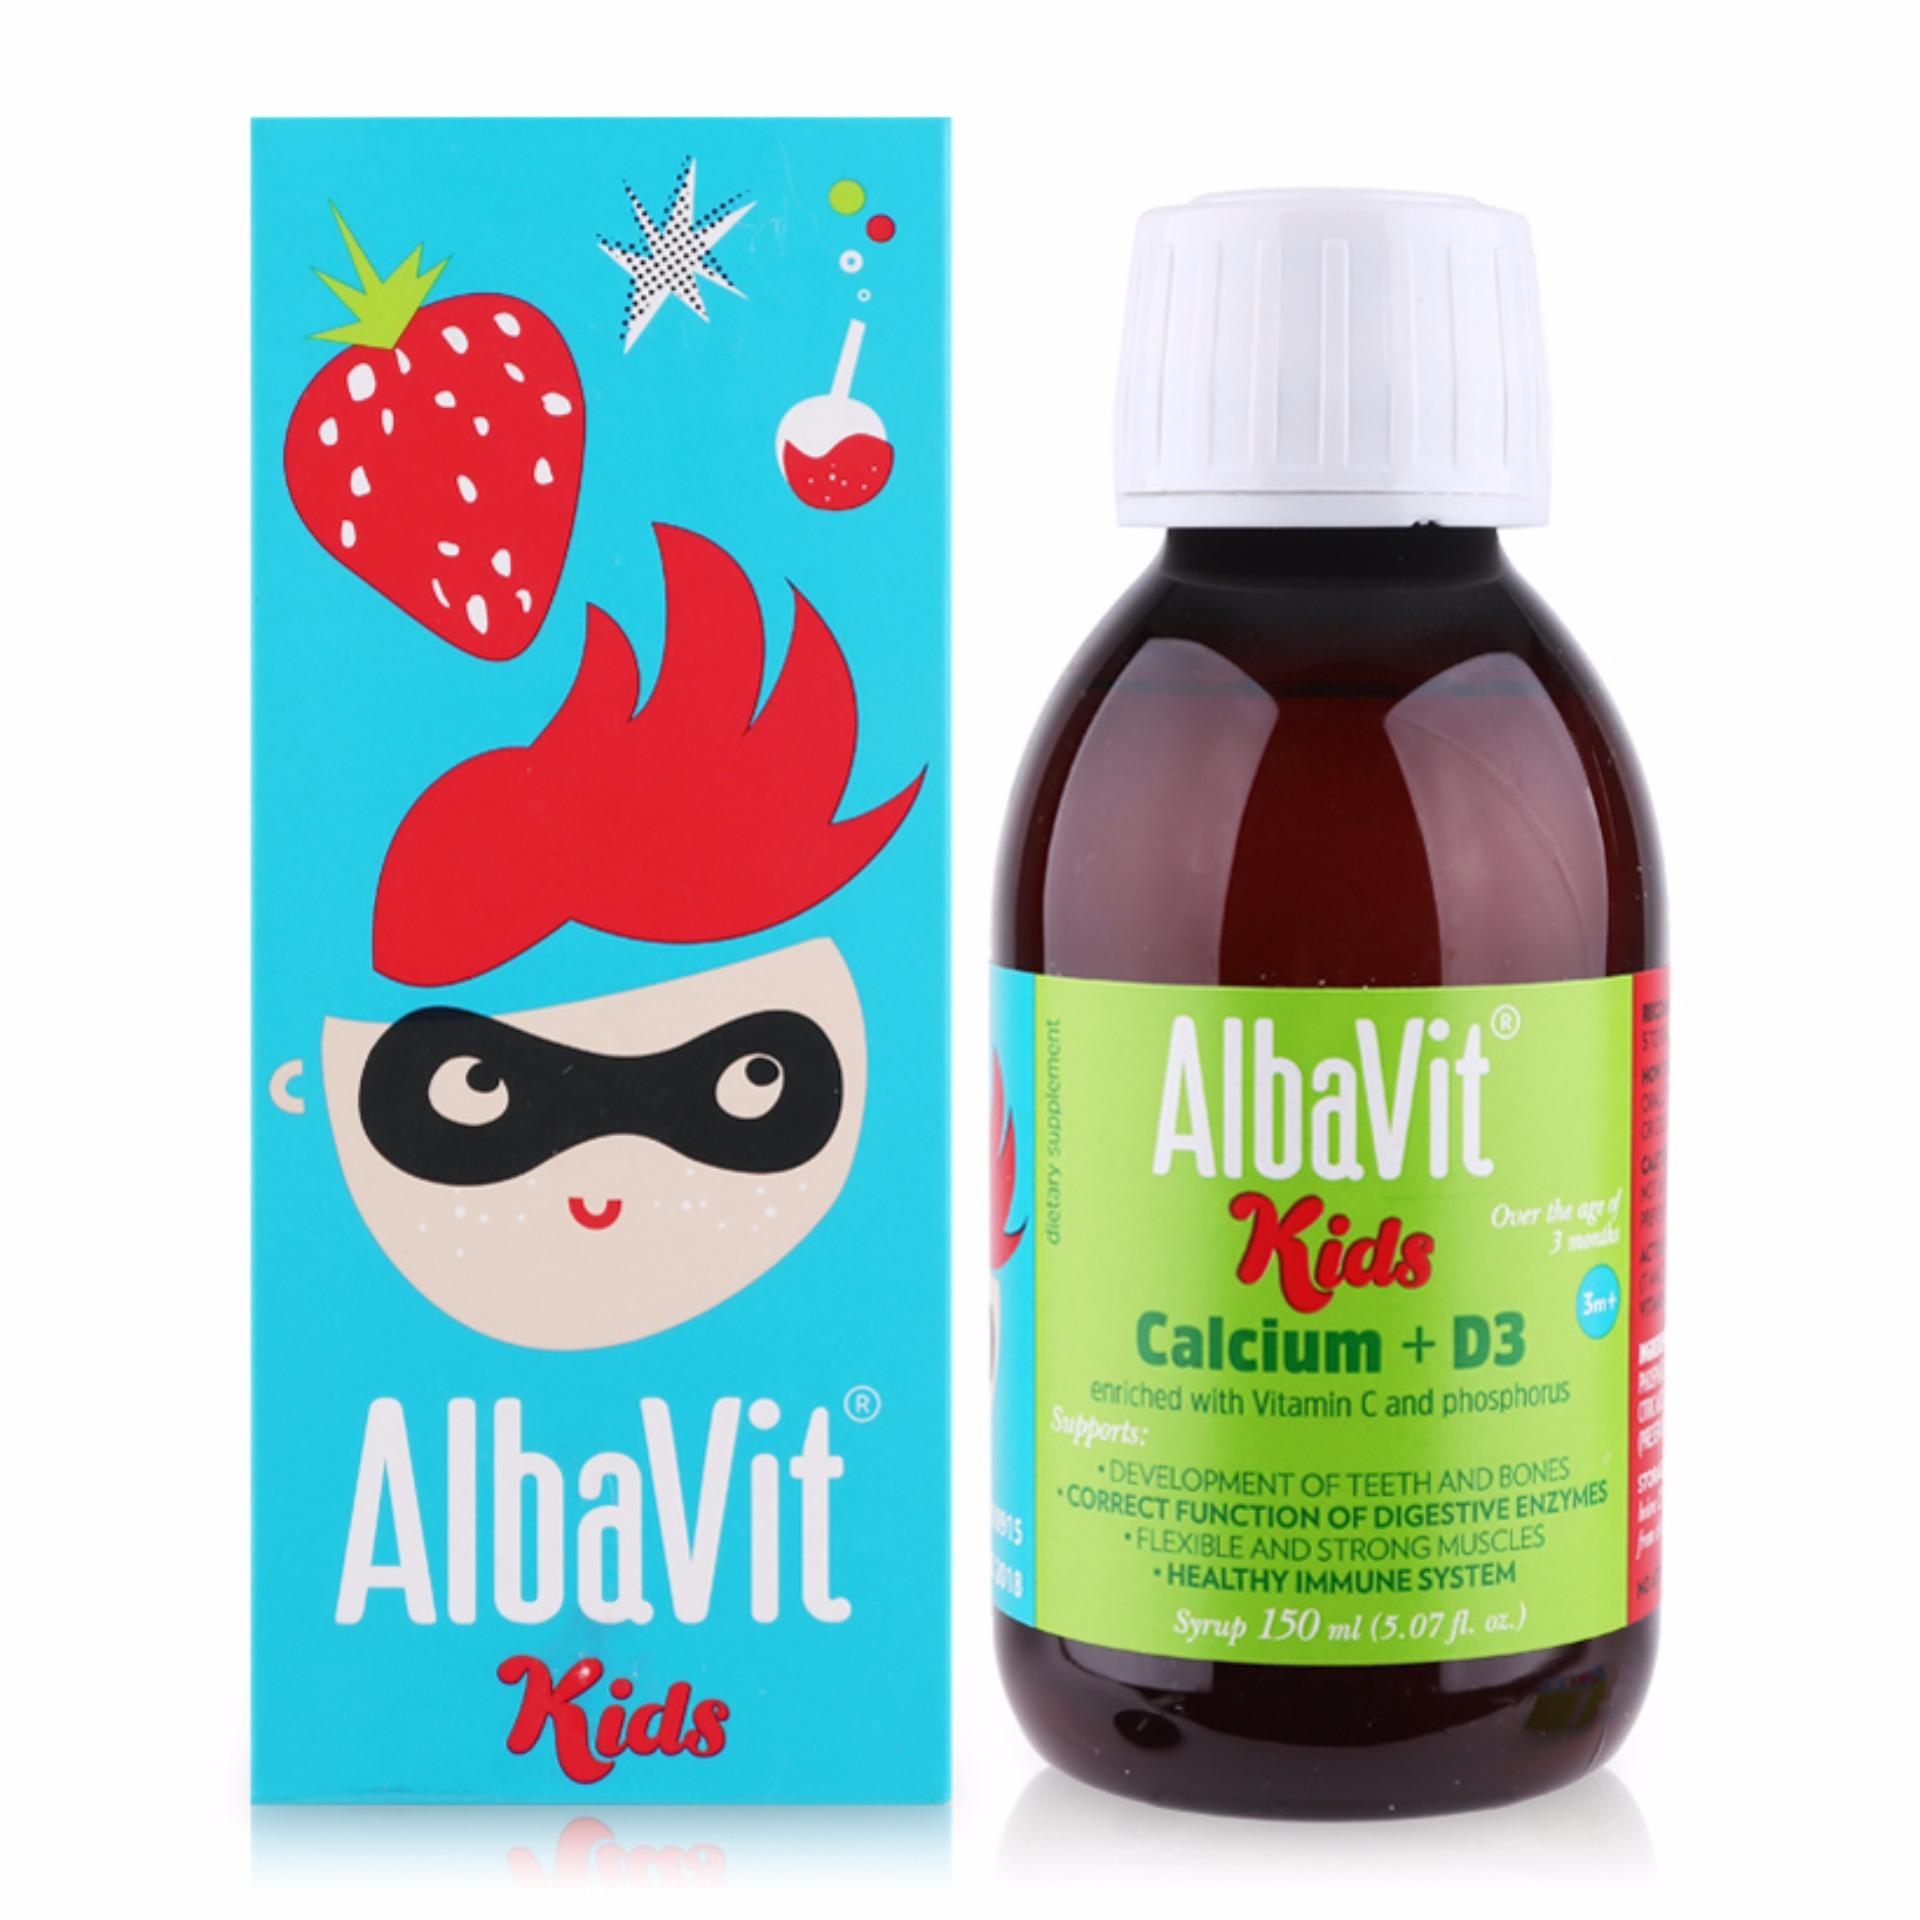 Siro Alba Thyment Albavit Kids cung cấp Calcium và D3 cho bé